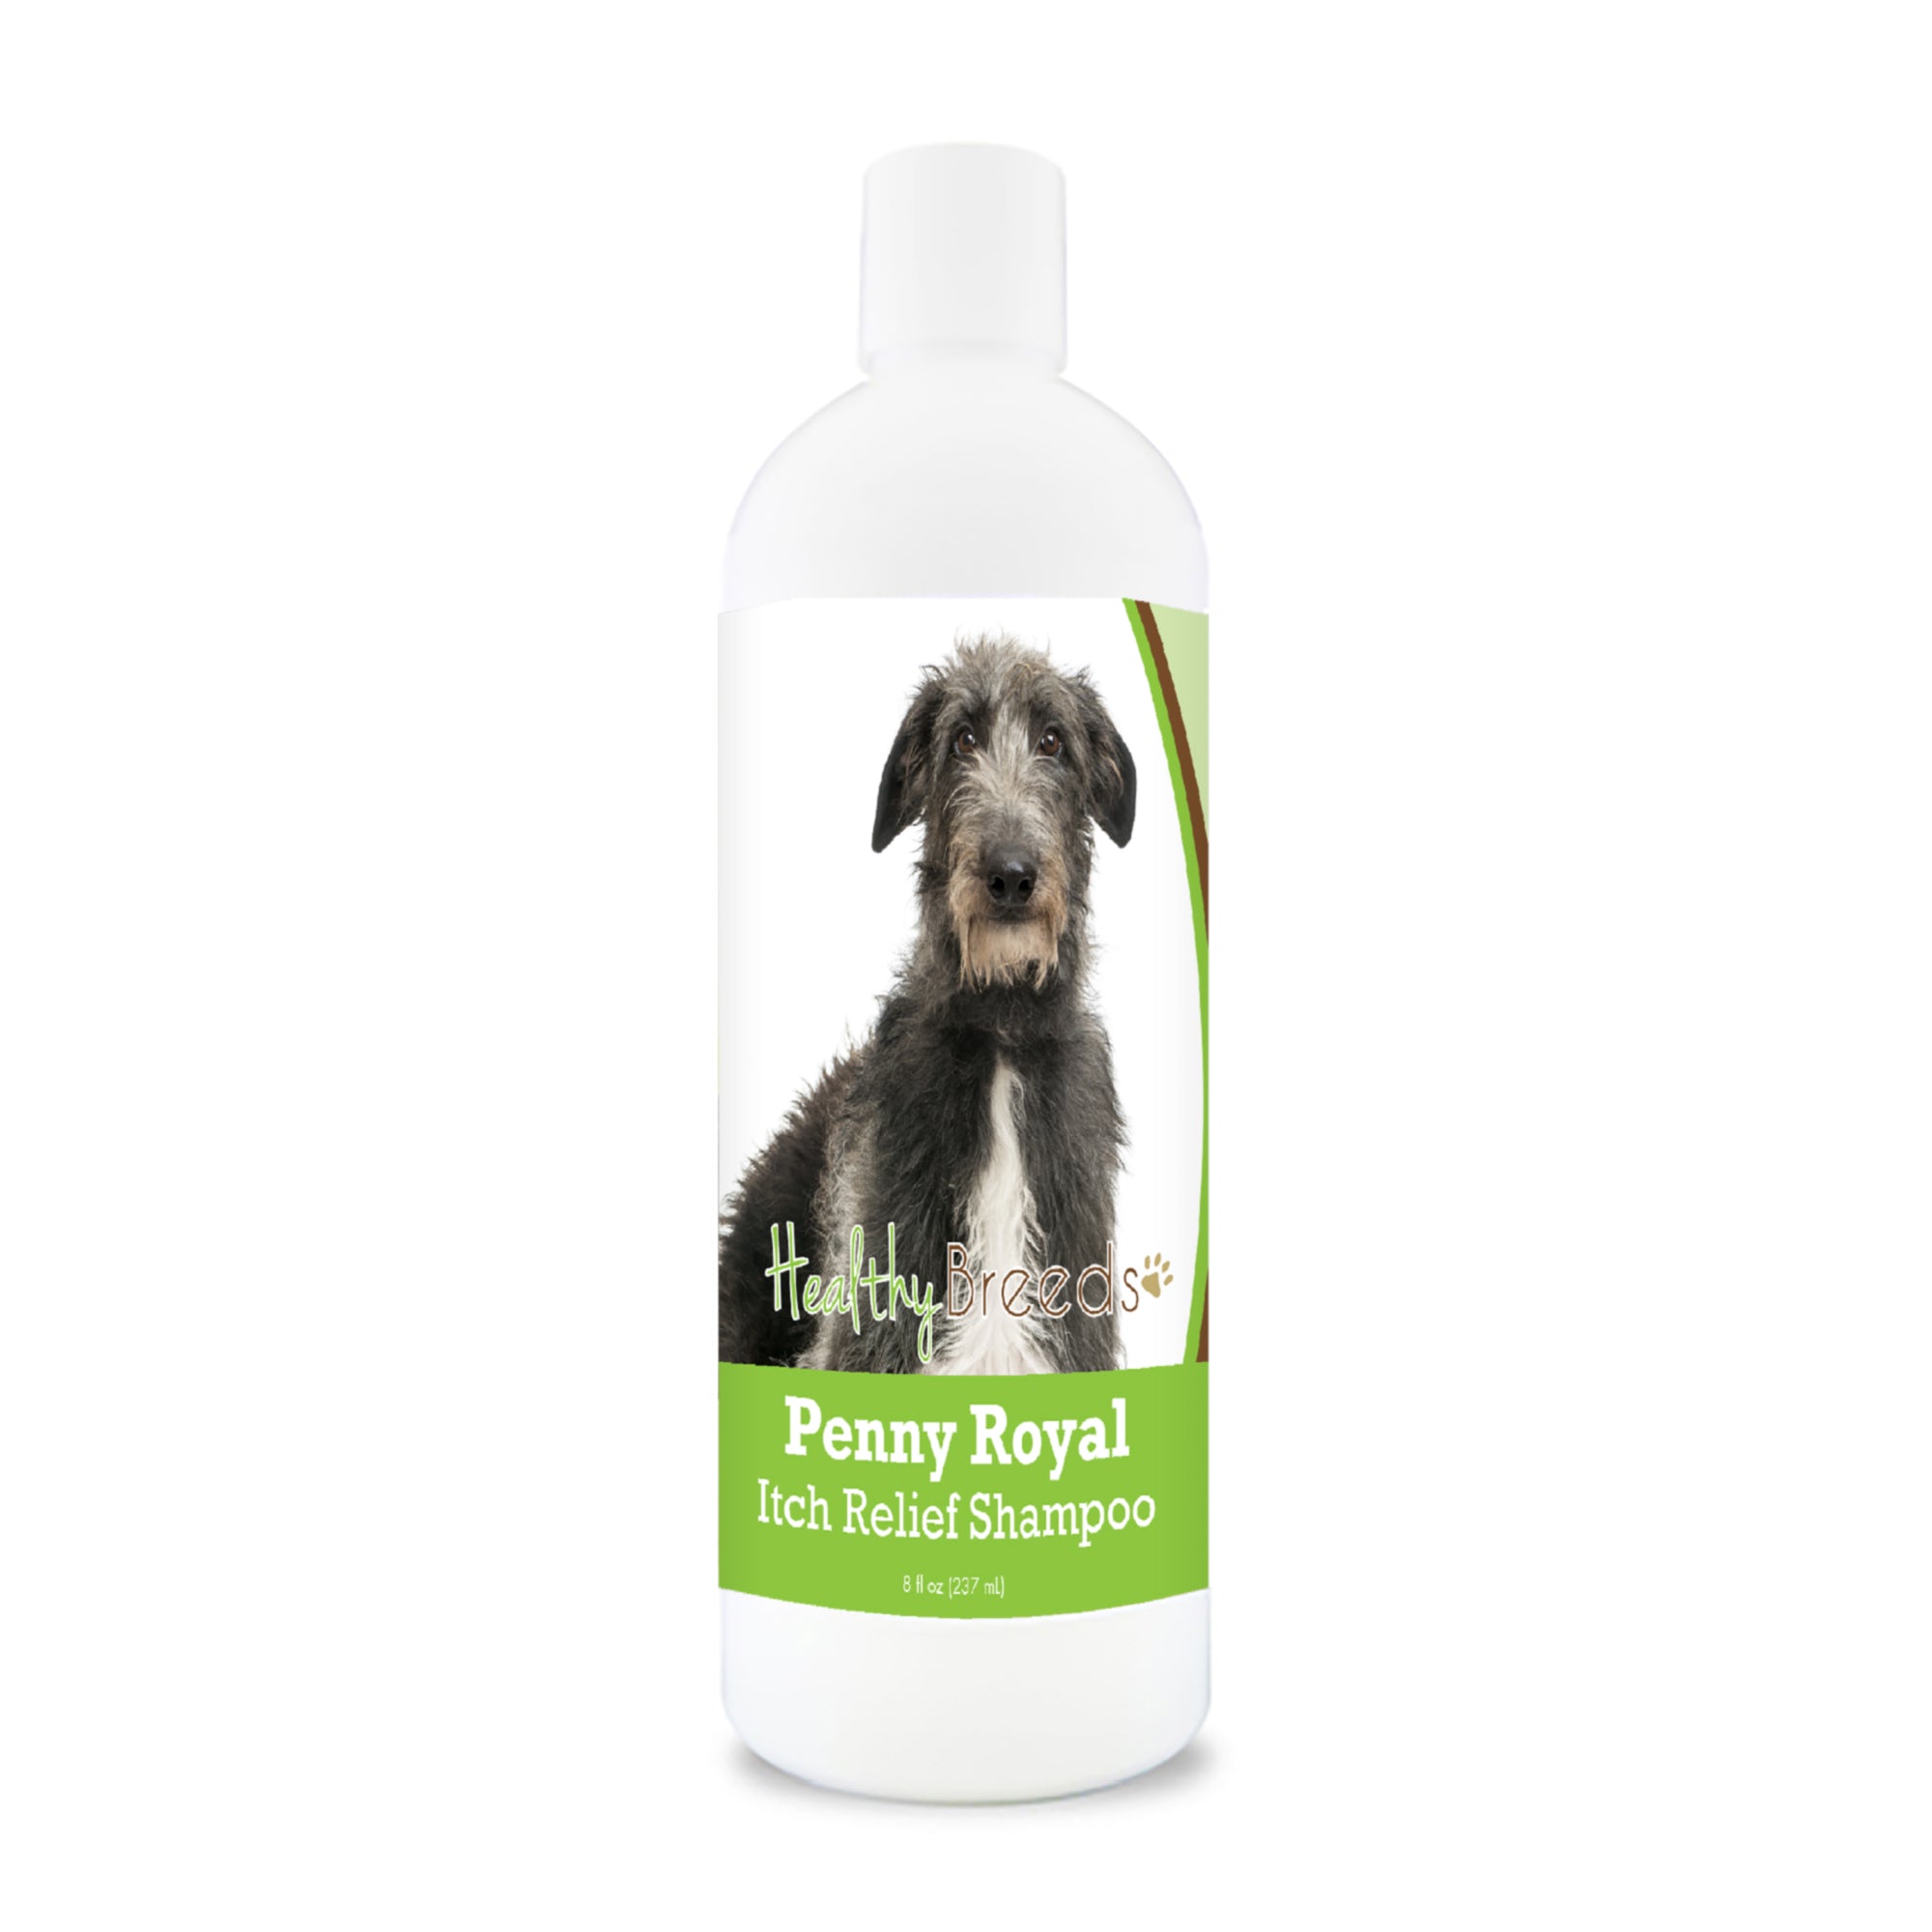 Scottish Deerhound Penny Royal Itch Relief Shampoo 8 oz